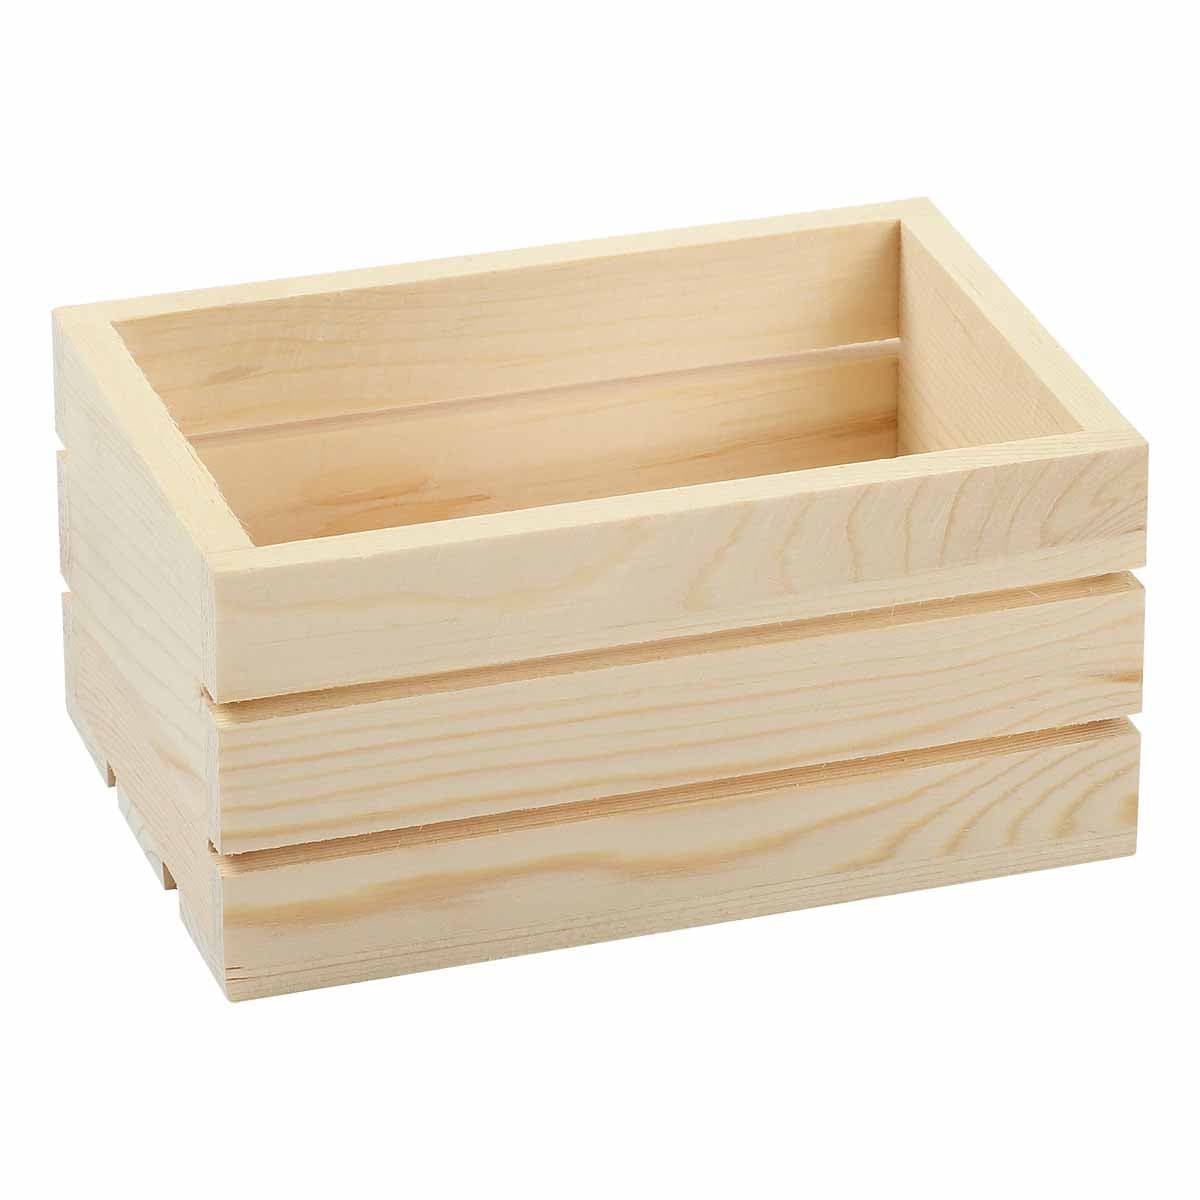 Image of Tim & Tess Mini Wooden Crate 12.5 x 8.5 x 6cm